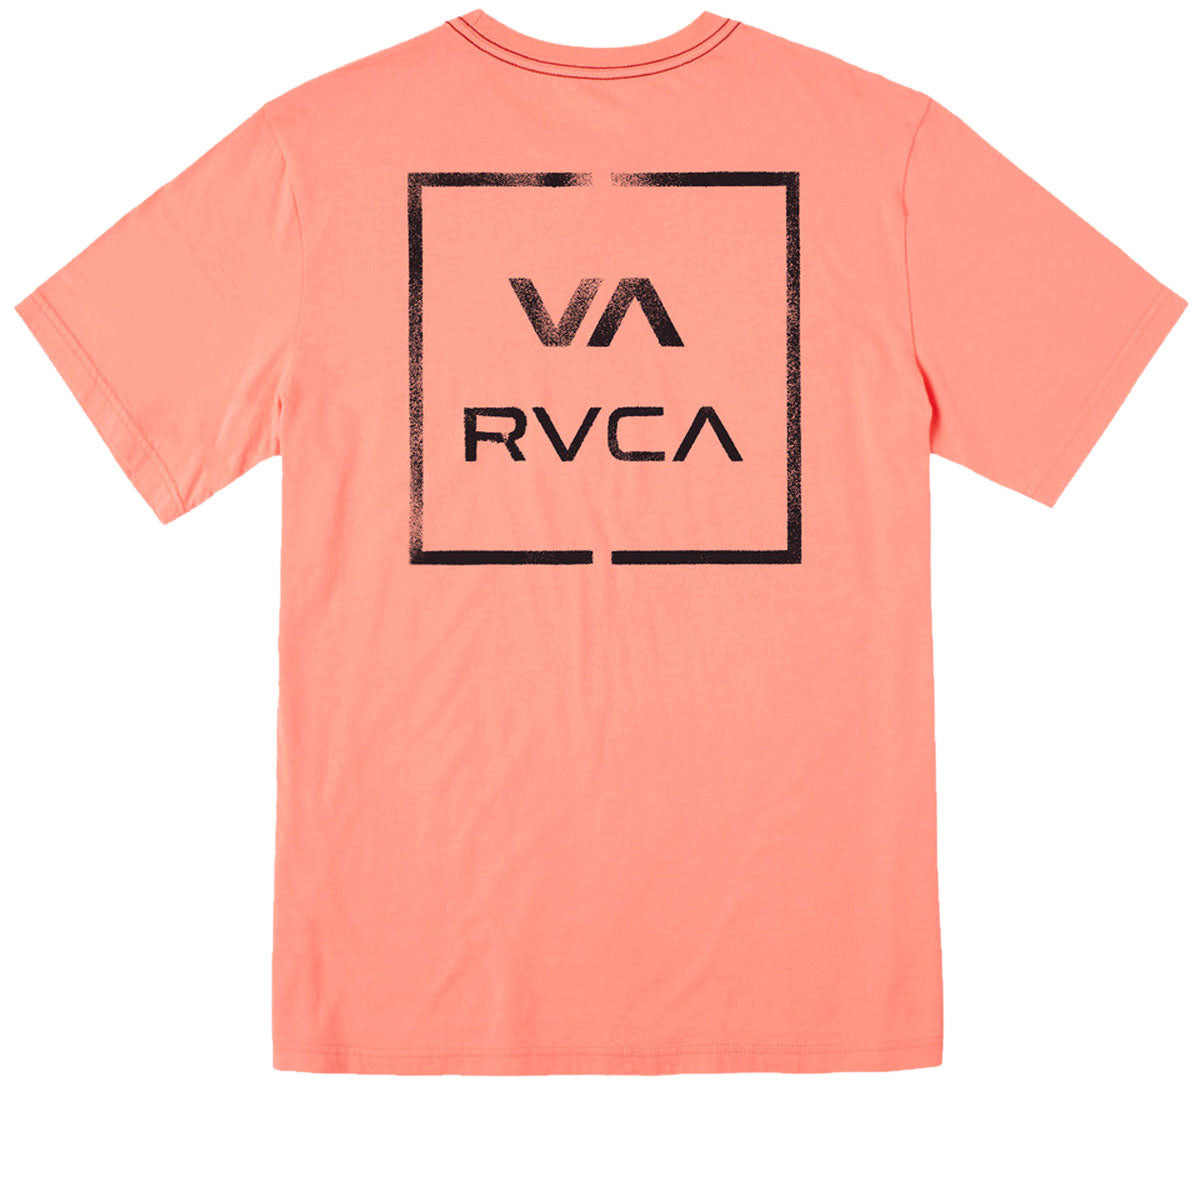 RVCA Va All The Way T-Shirt - Vintage Salmon image 1